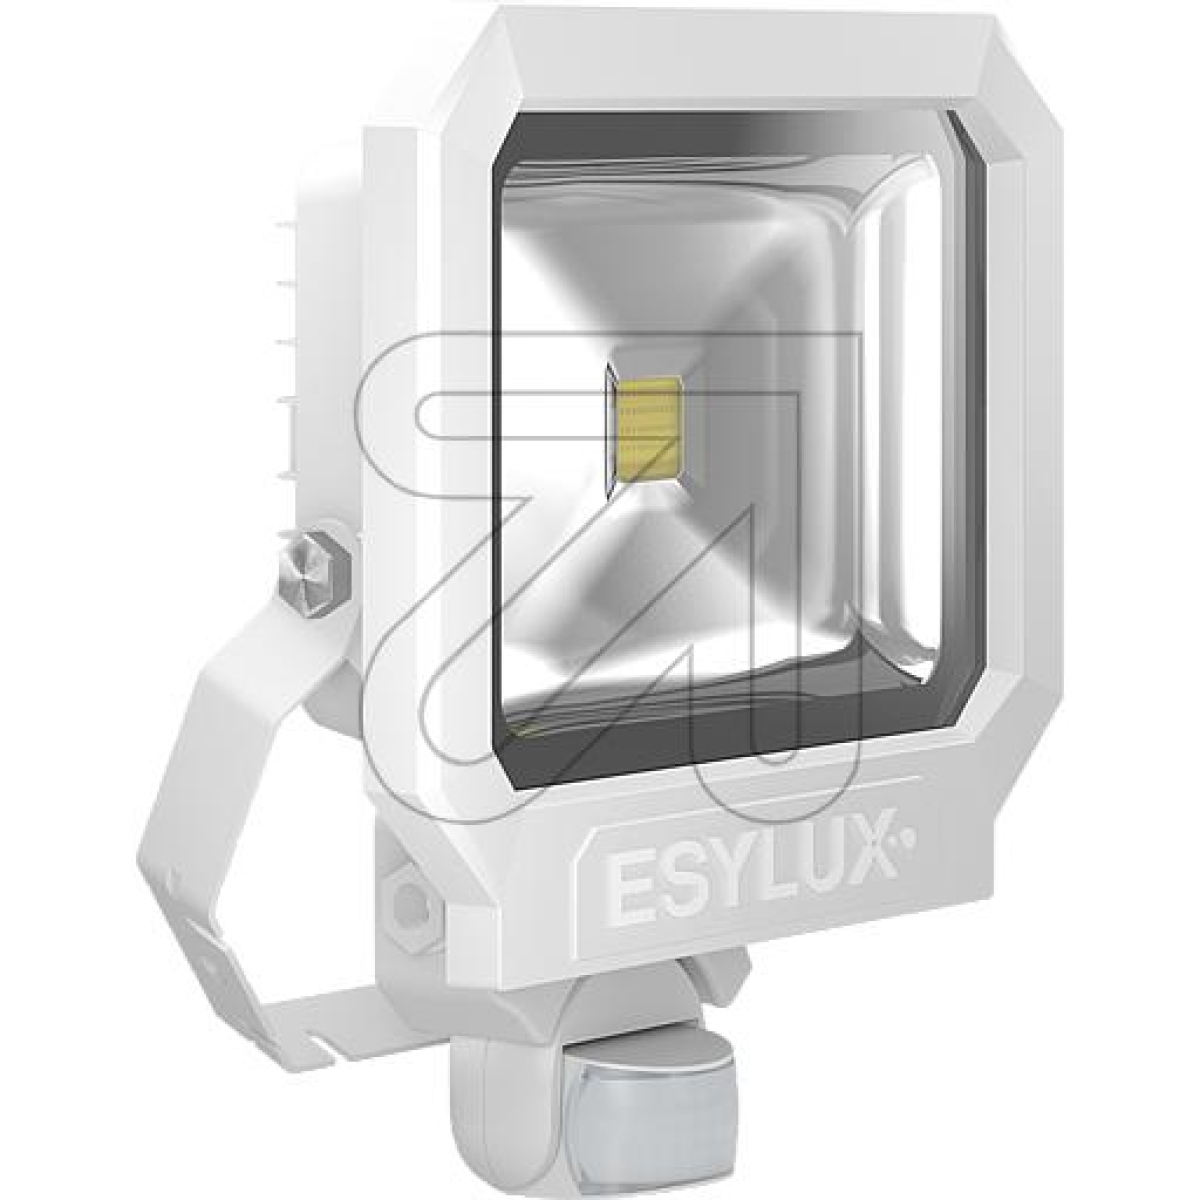 ESYLUXLED spotlight IP65 with BWM 30W 3000K, white EL10810121Article-No: 681755